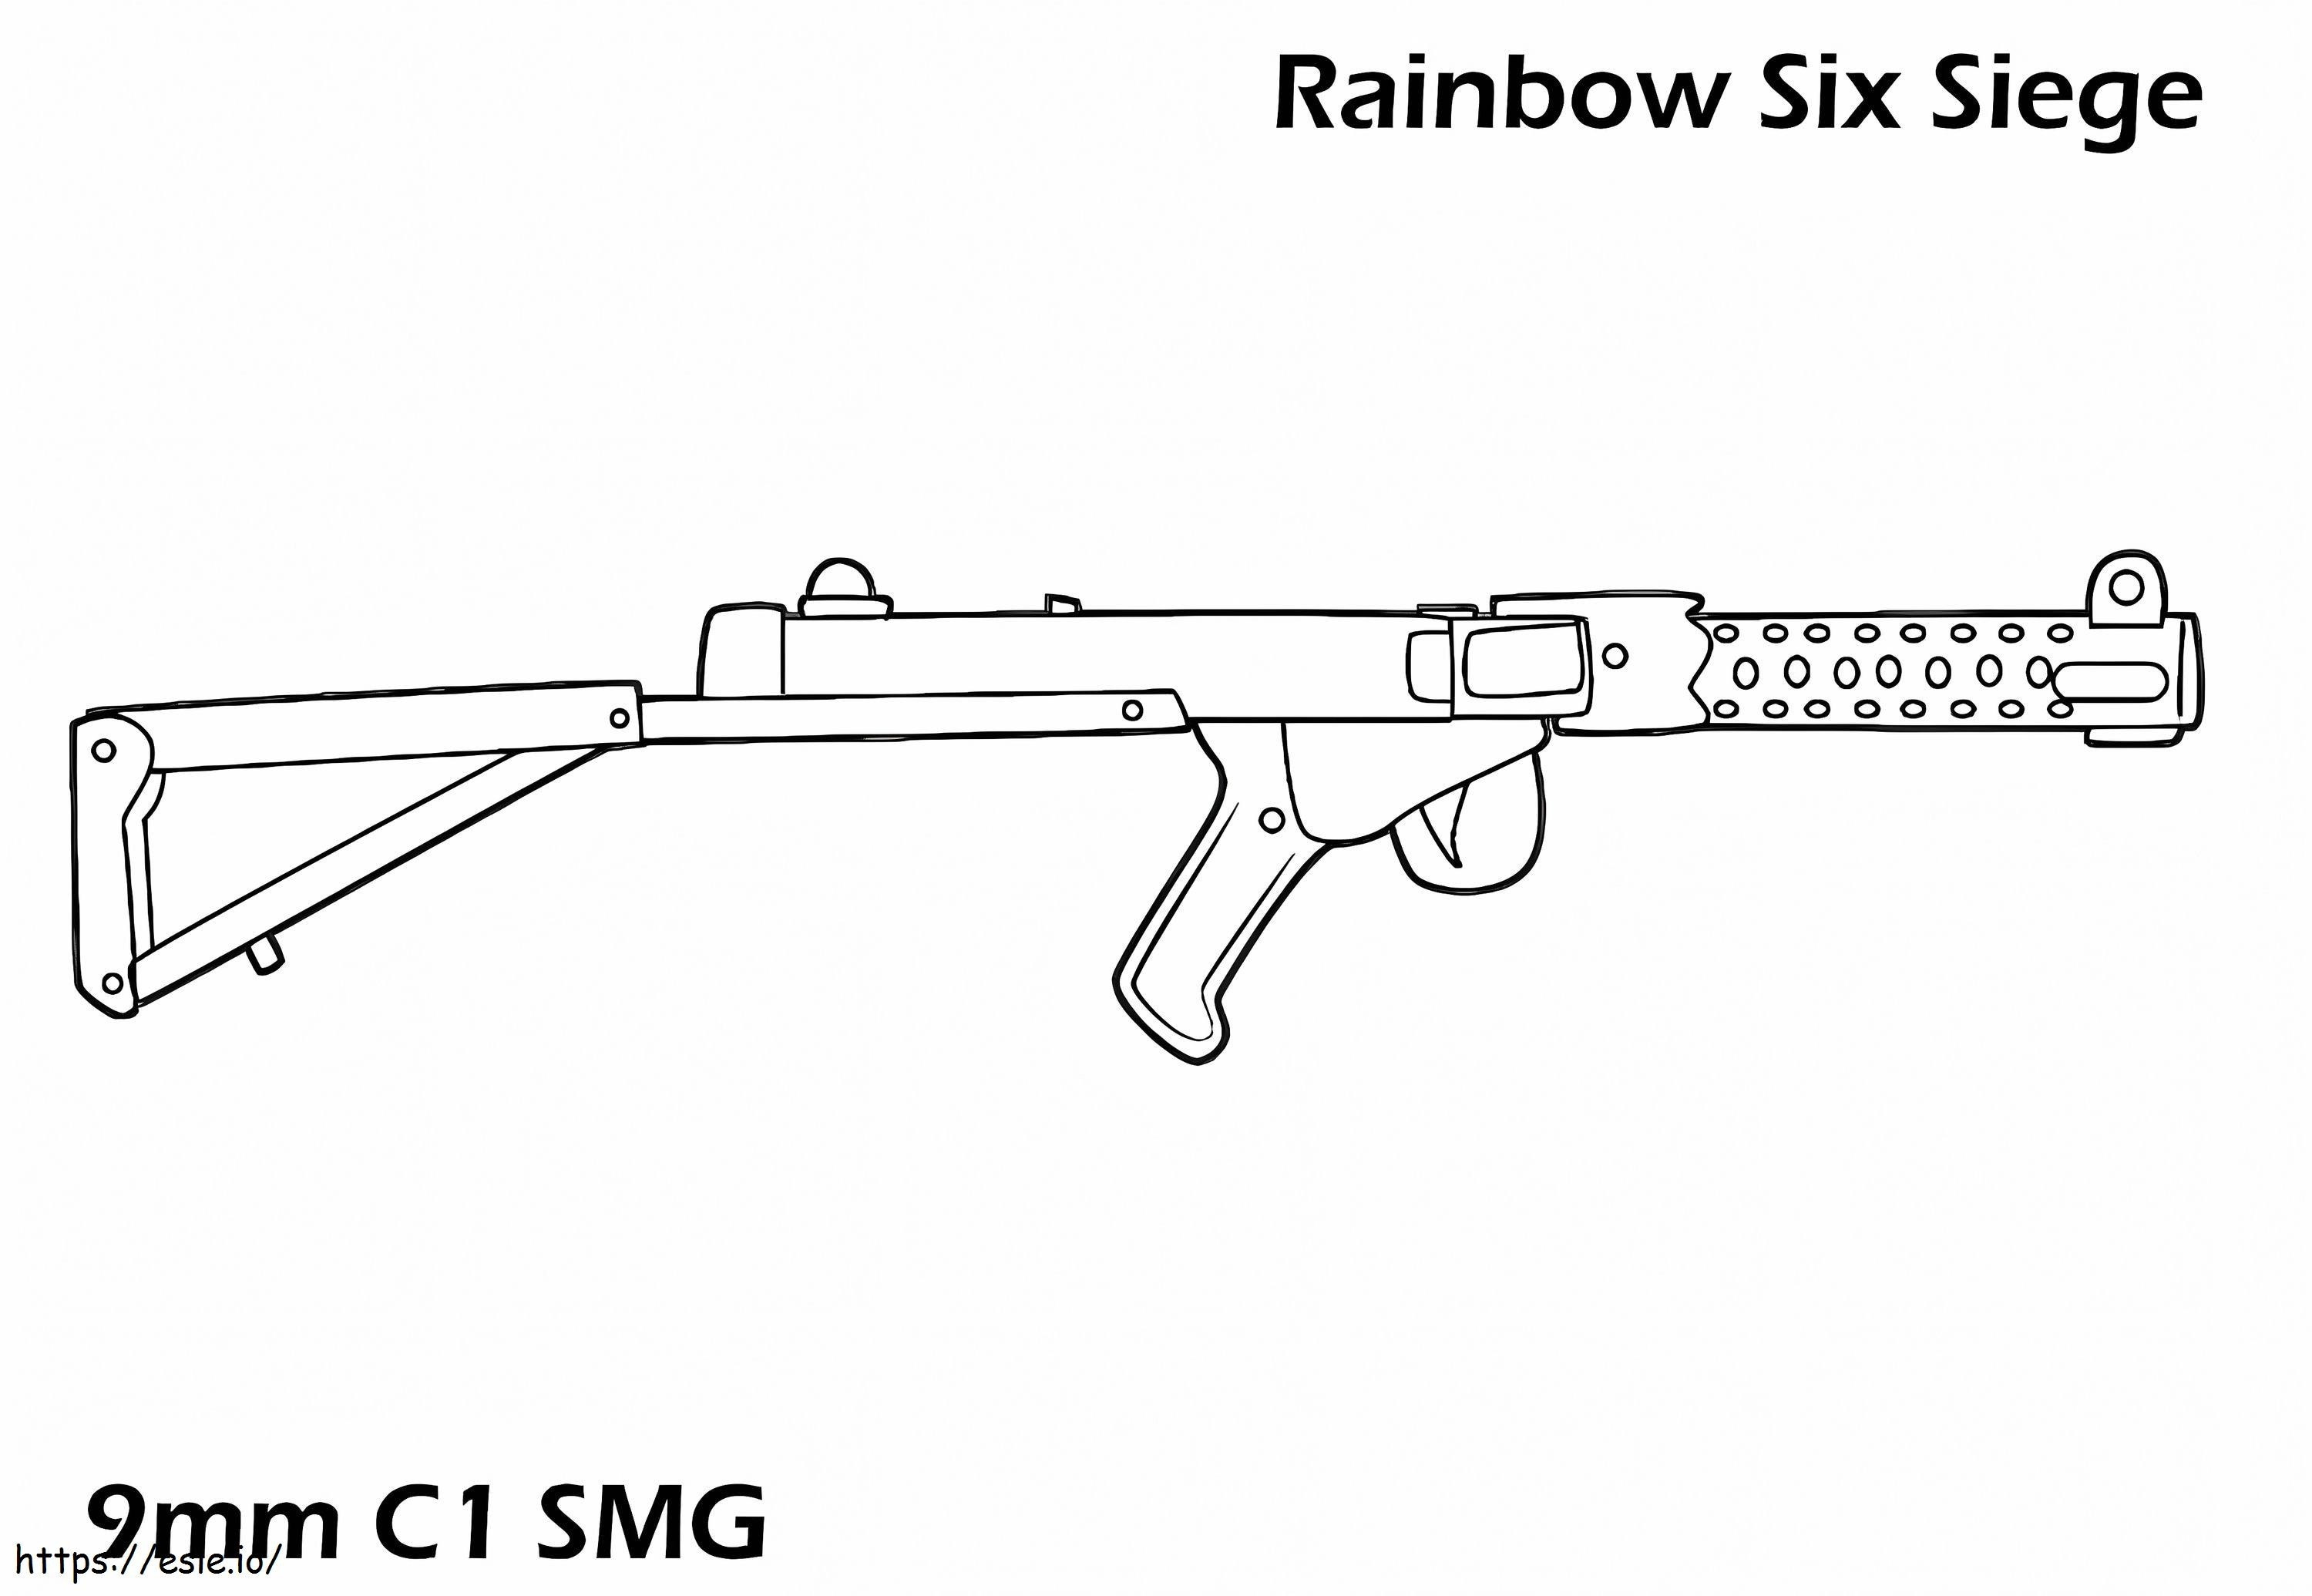 C1 SMG Rainbow Six Siege boyama